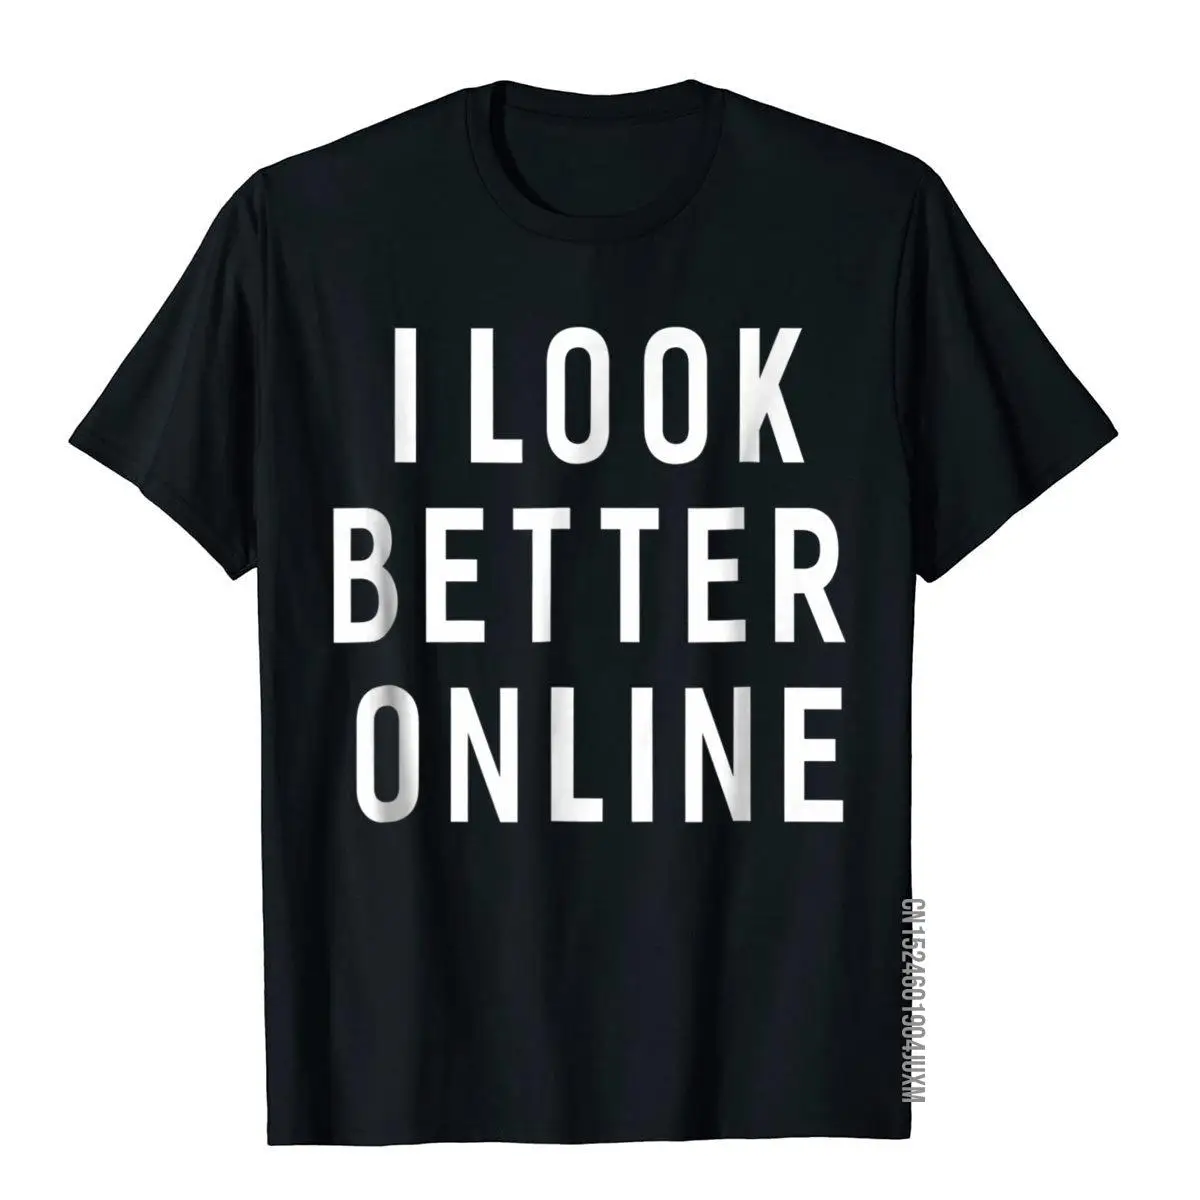 I Look Better Online Funny Sayings T-Shirt For Women Men__97A2064black